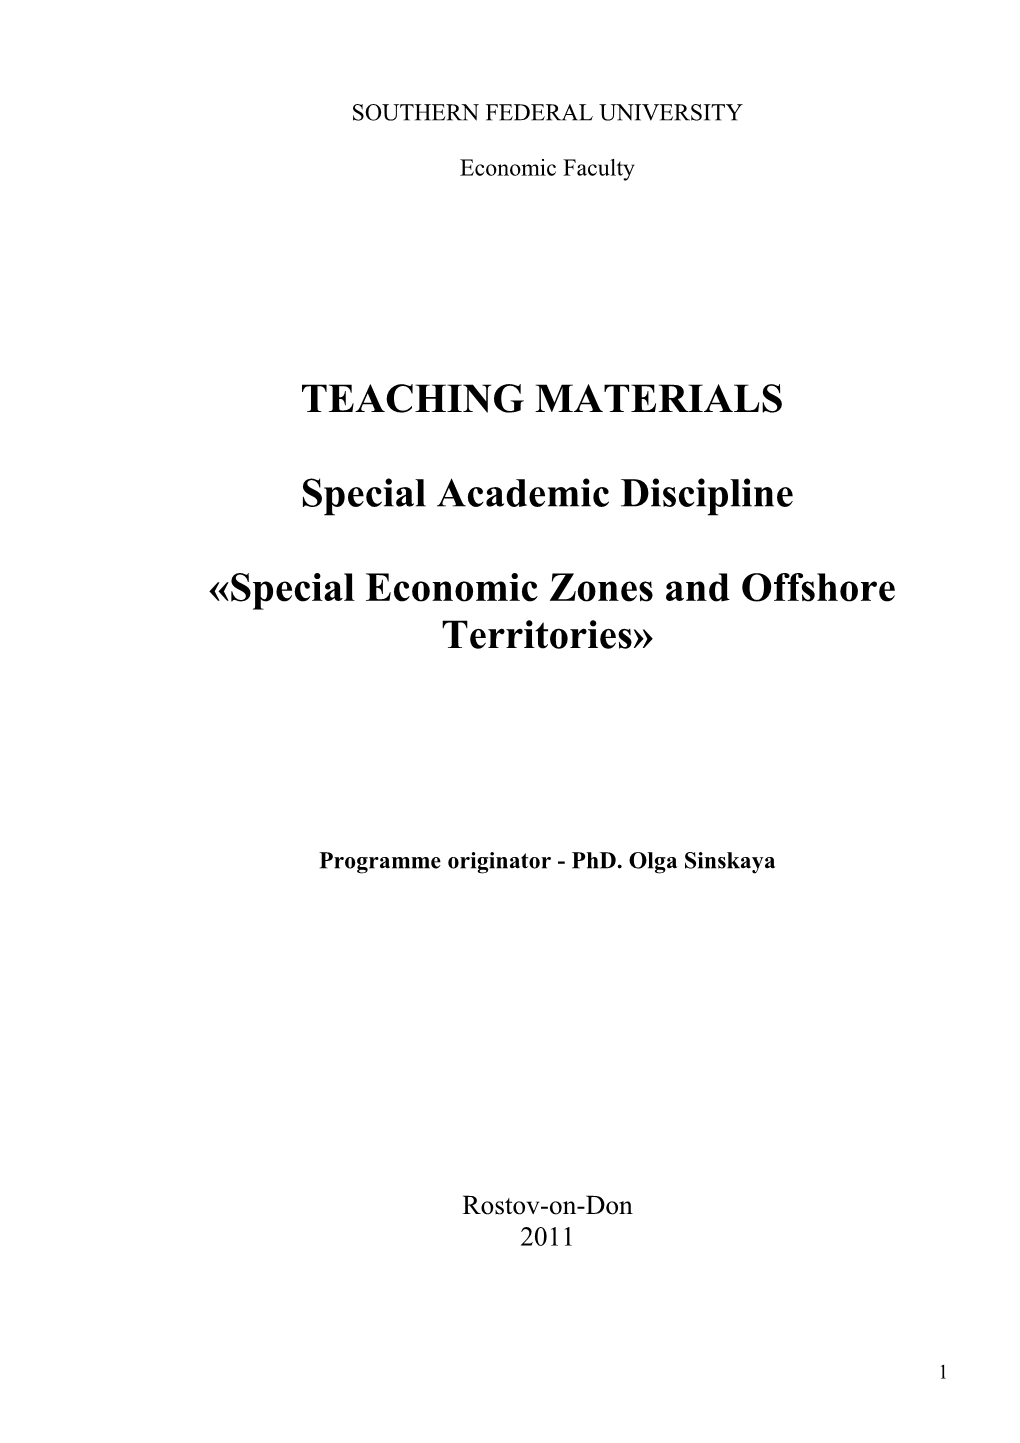 Special Economic Zones and Offshore Territories